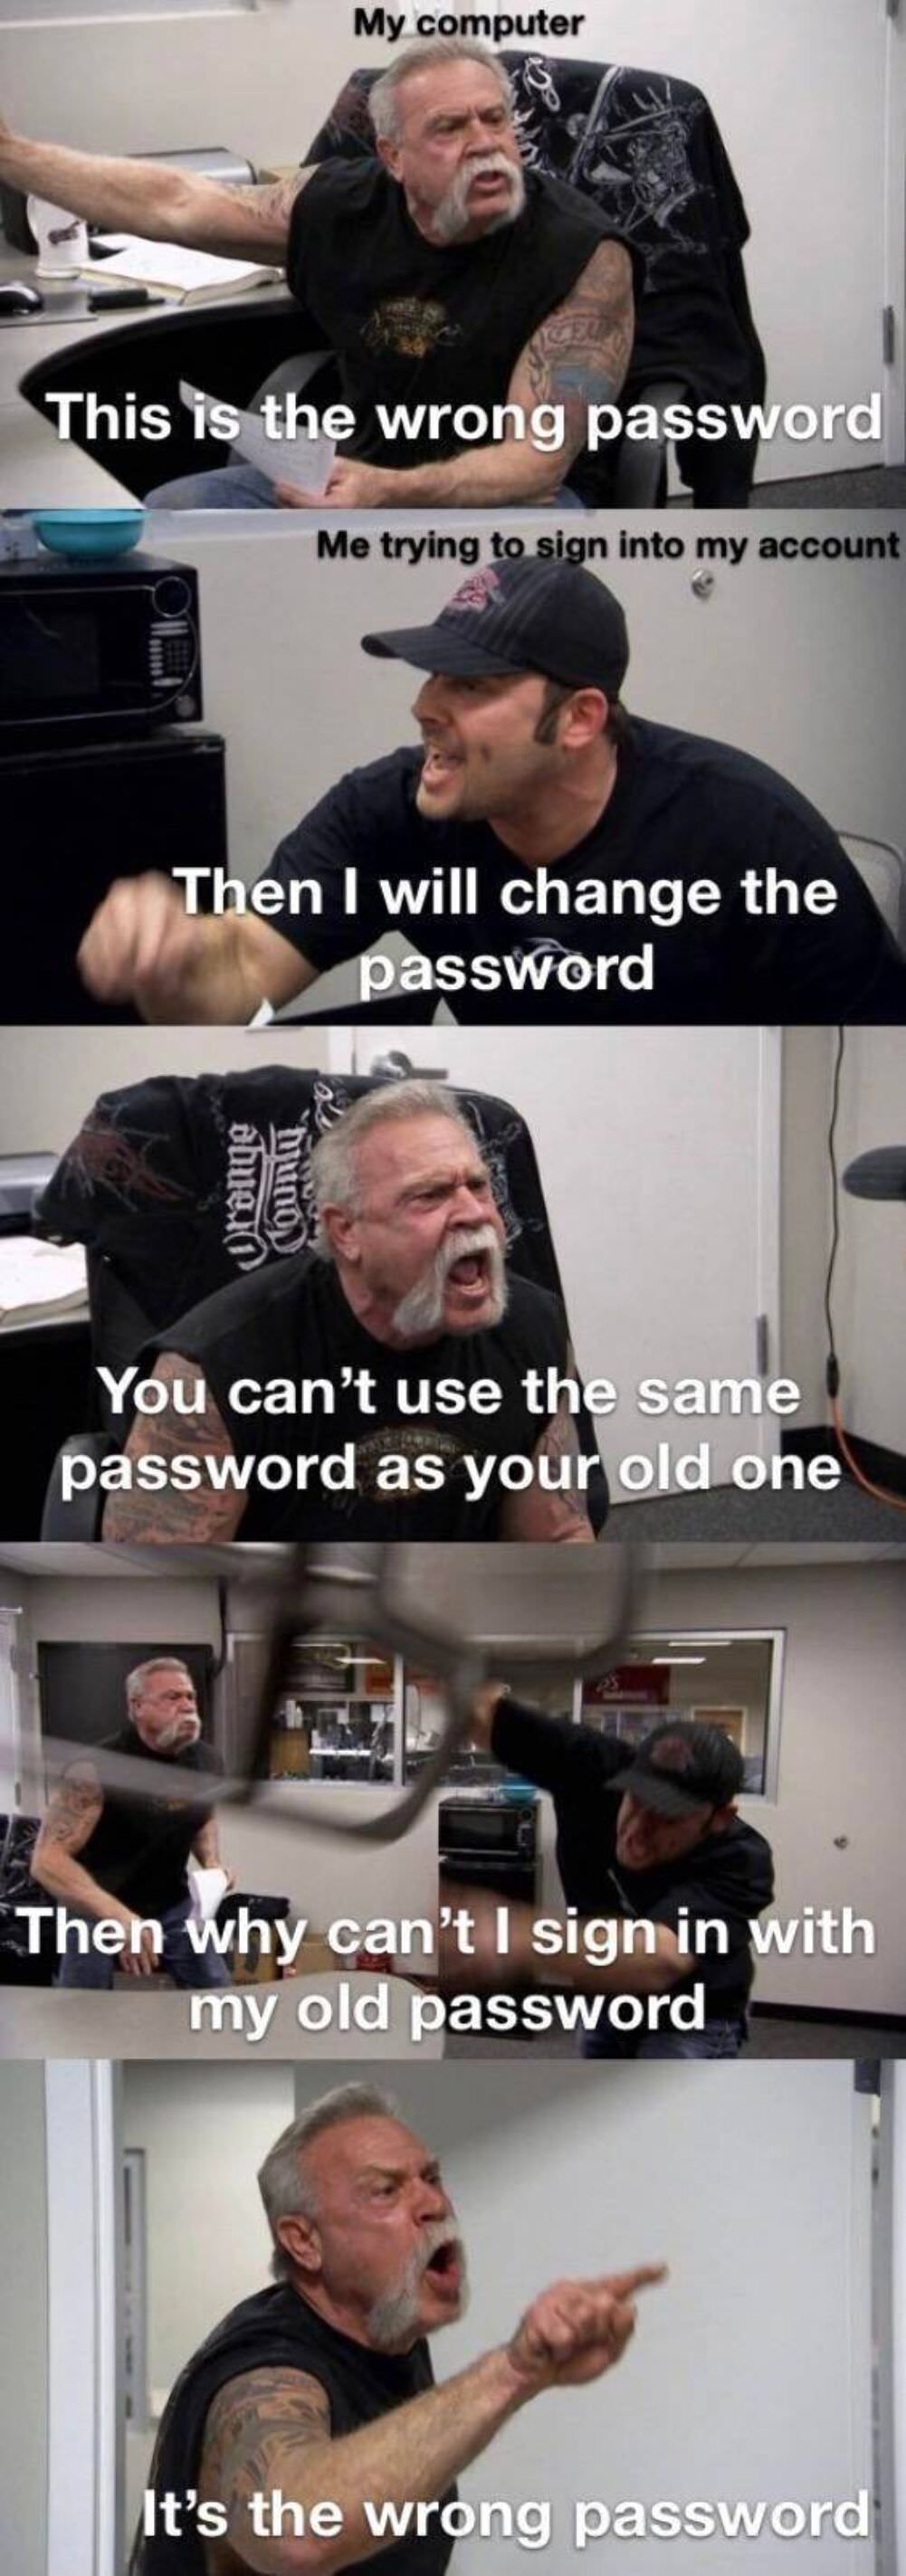 your password